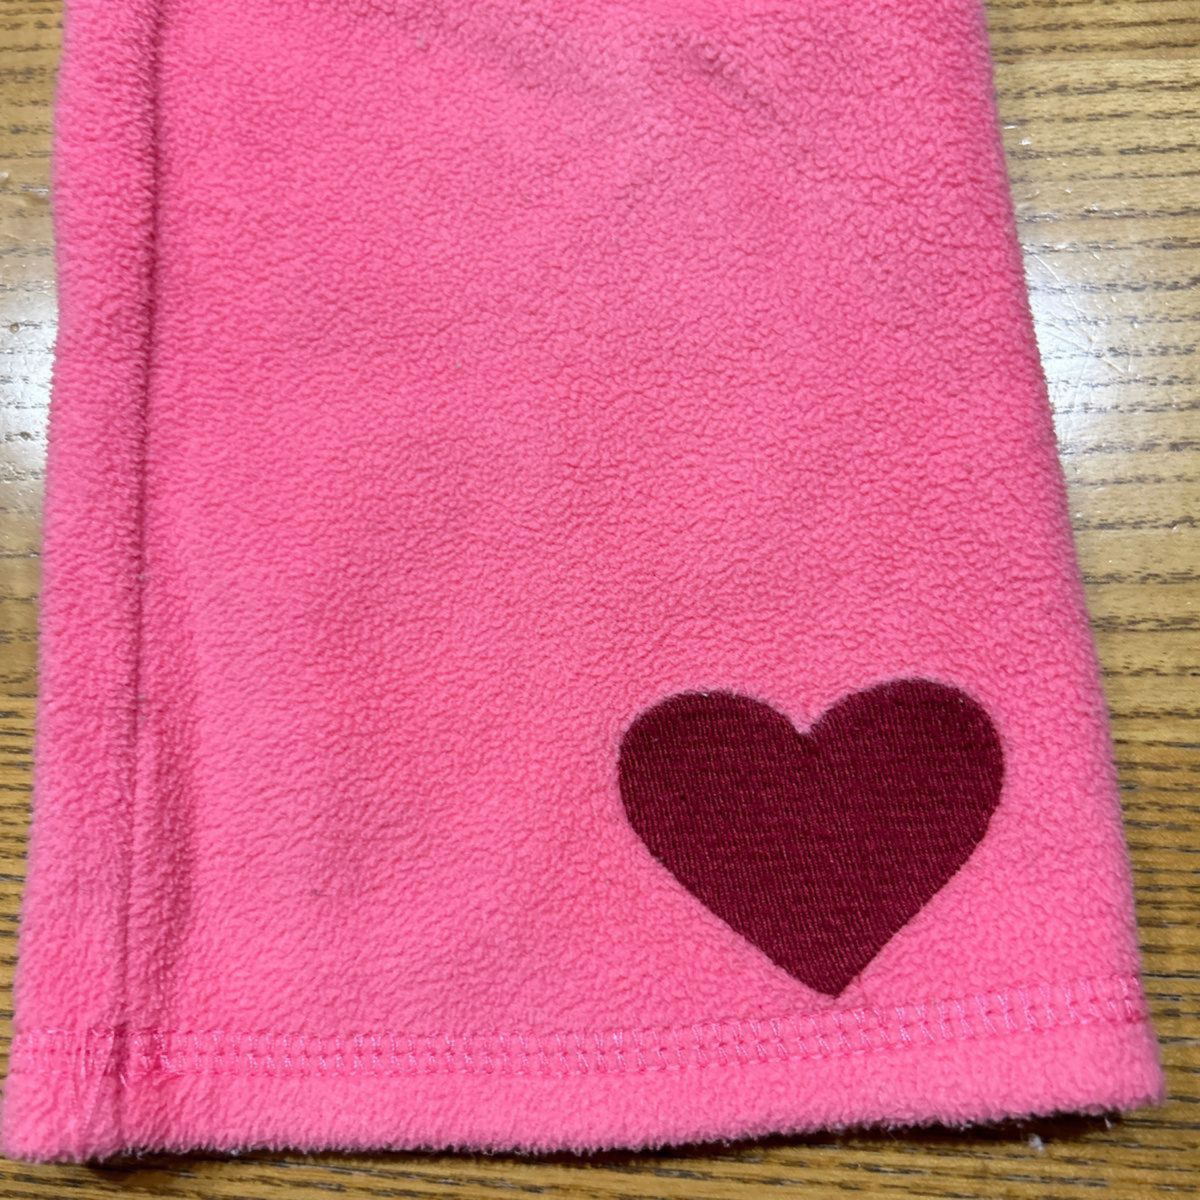 【crazy8】(USED)ピンクフリース素材 裾ハート刺繍 ロングパンツ 3T(100cm)